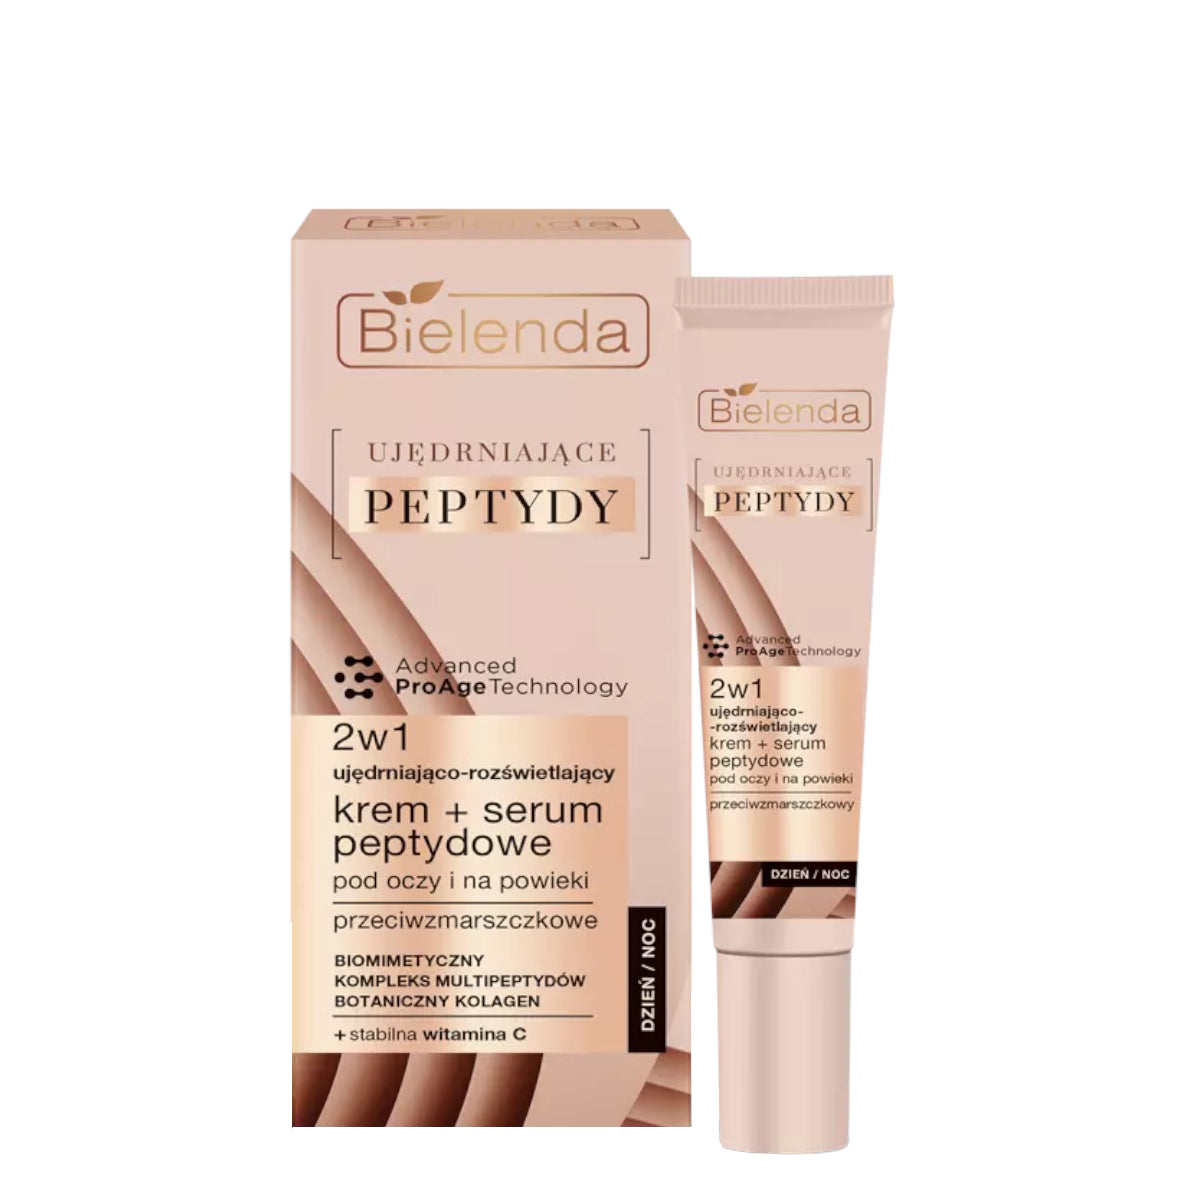 Bielenda Firming Peptides Firming & Illuminating Aniti-Wrinkle Eye Cream